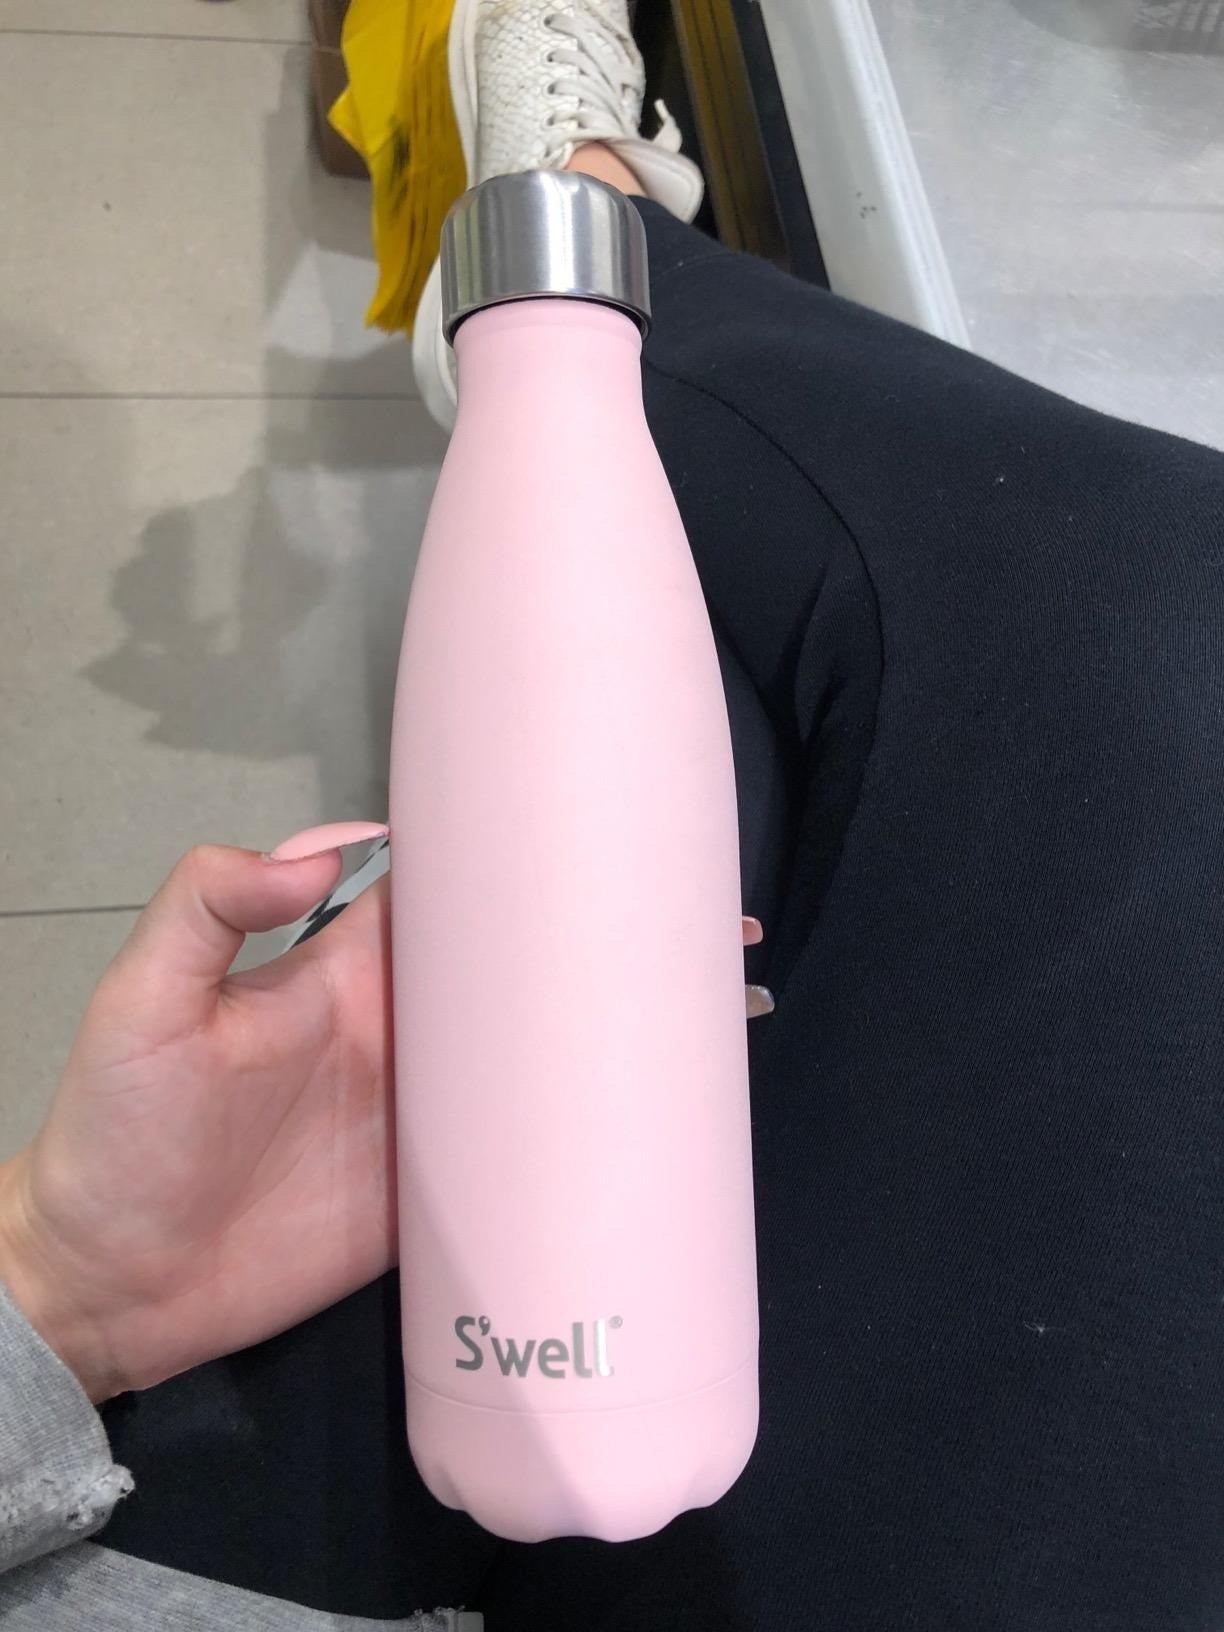 Reusable S'well Bottle // Pink 25oz